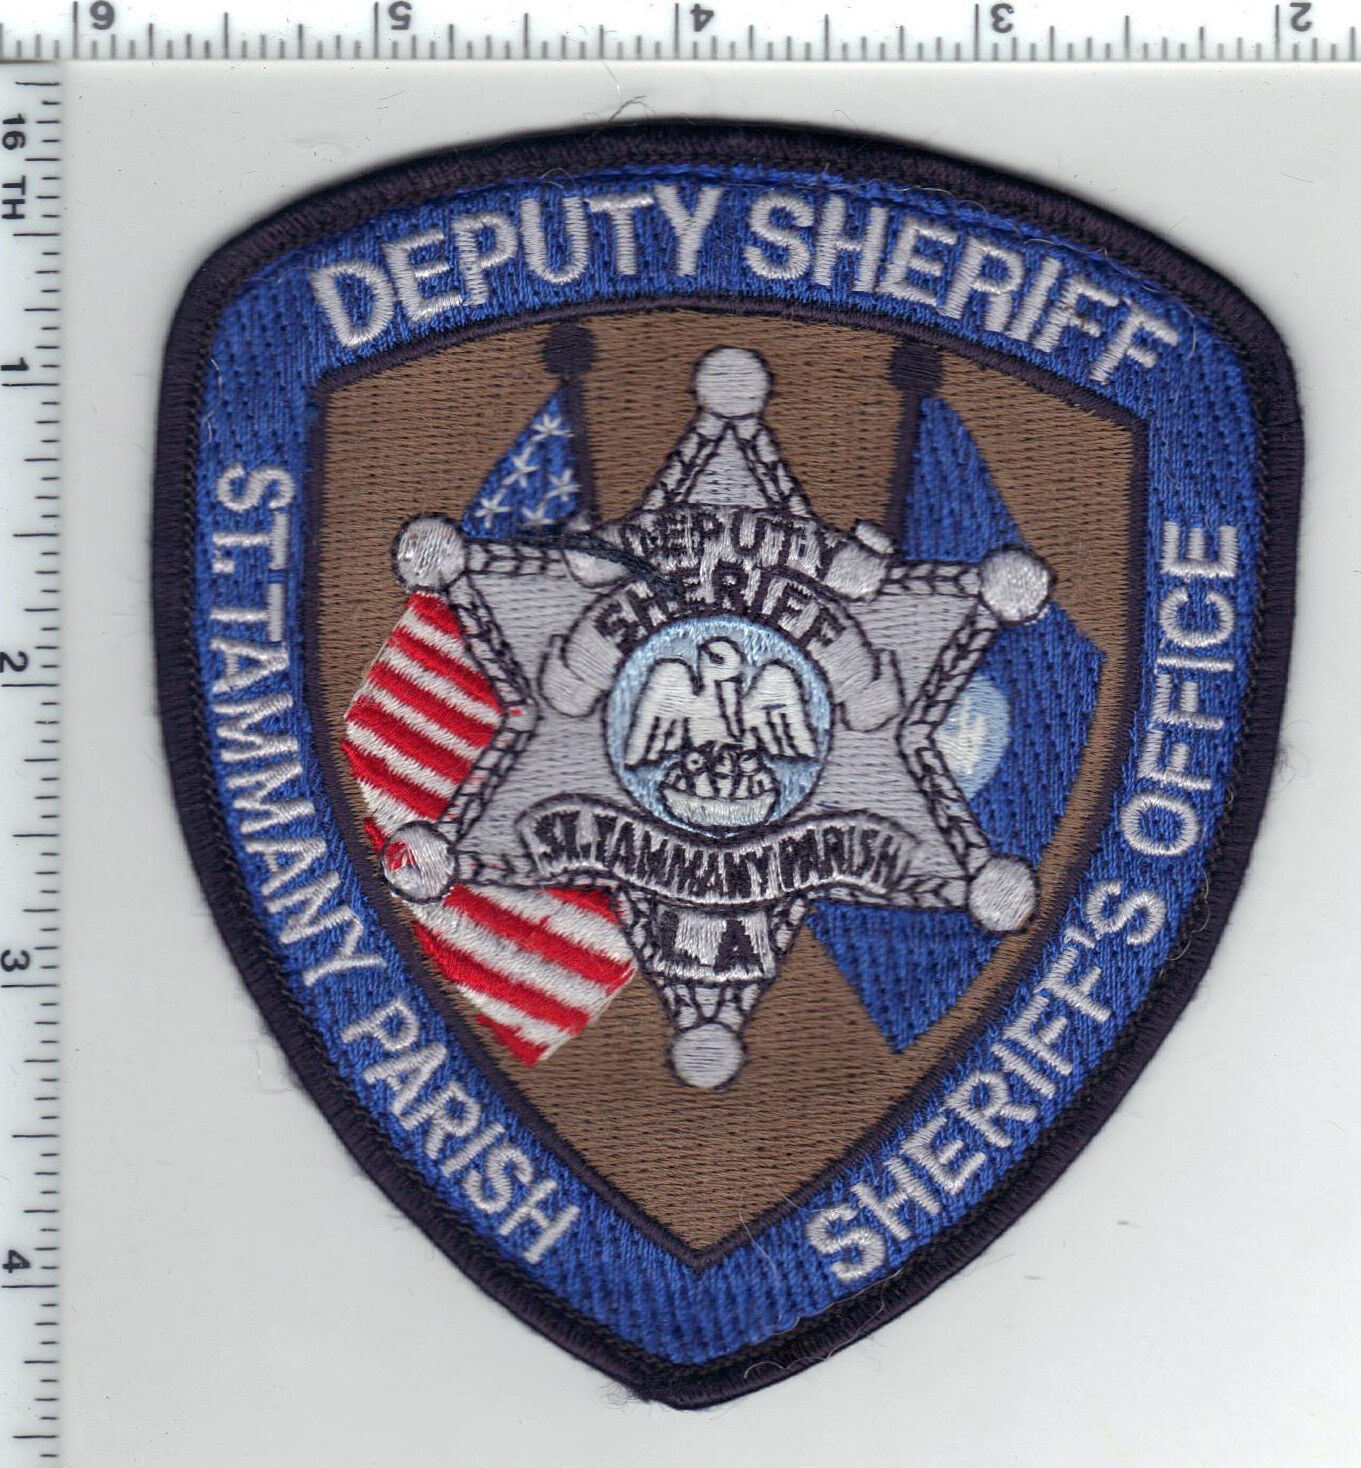 St. Tammany Parish Sheriff (louisiana) 4th Issue  Shoulder Patch